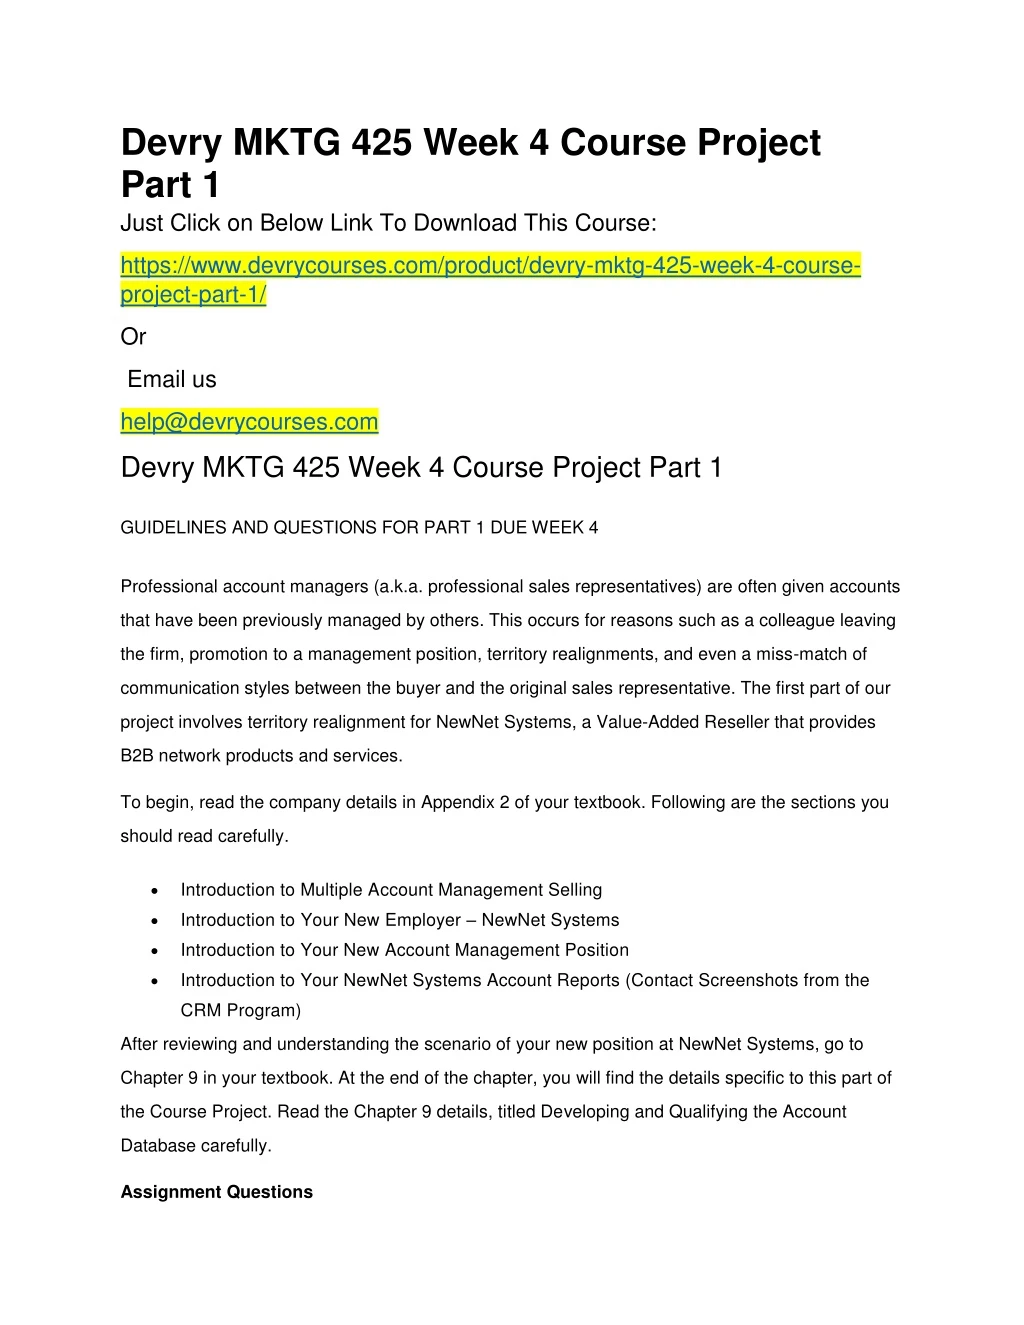 devry mktg 425 week 4 course project part 1 just